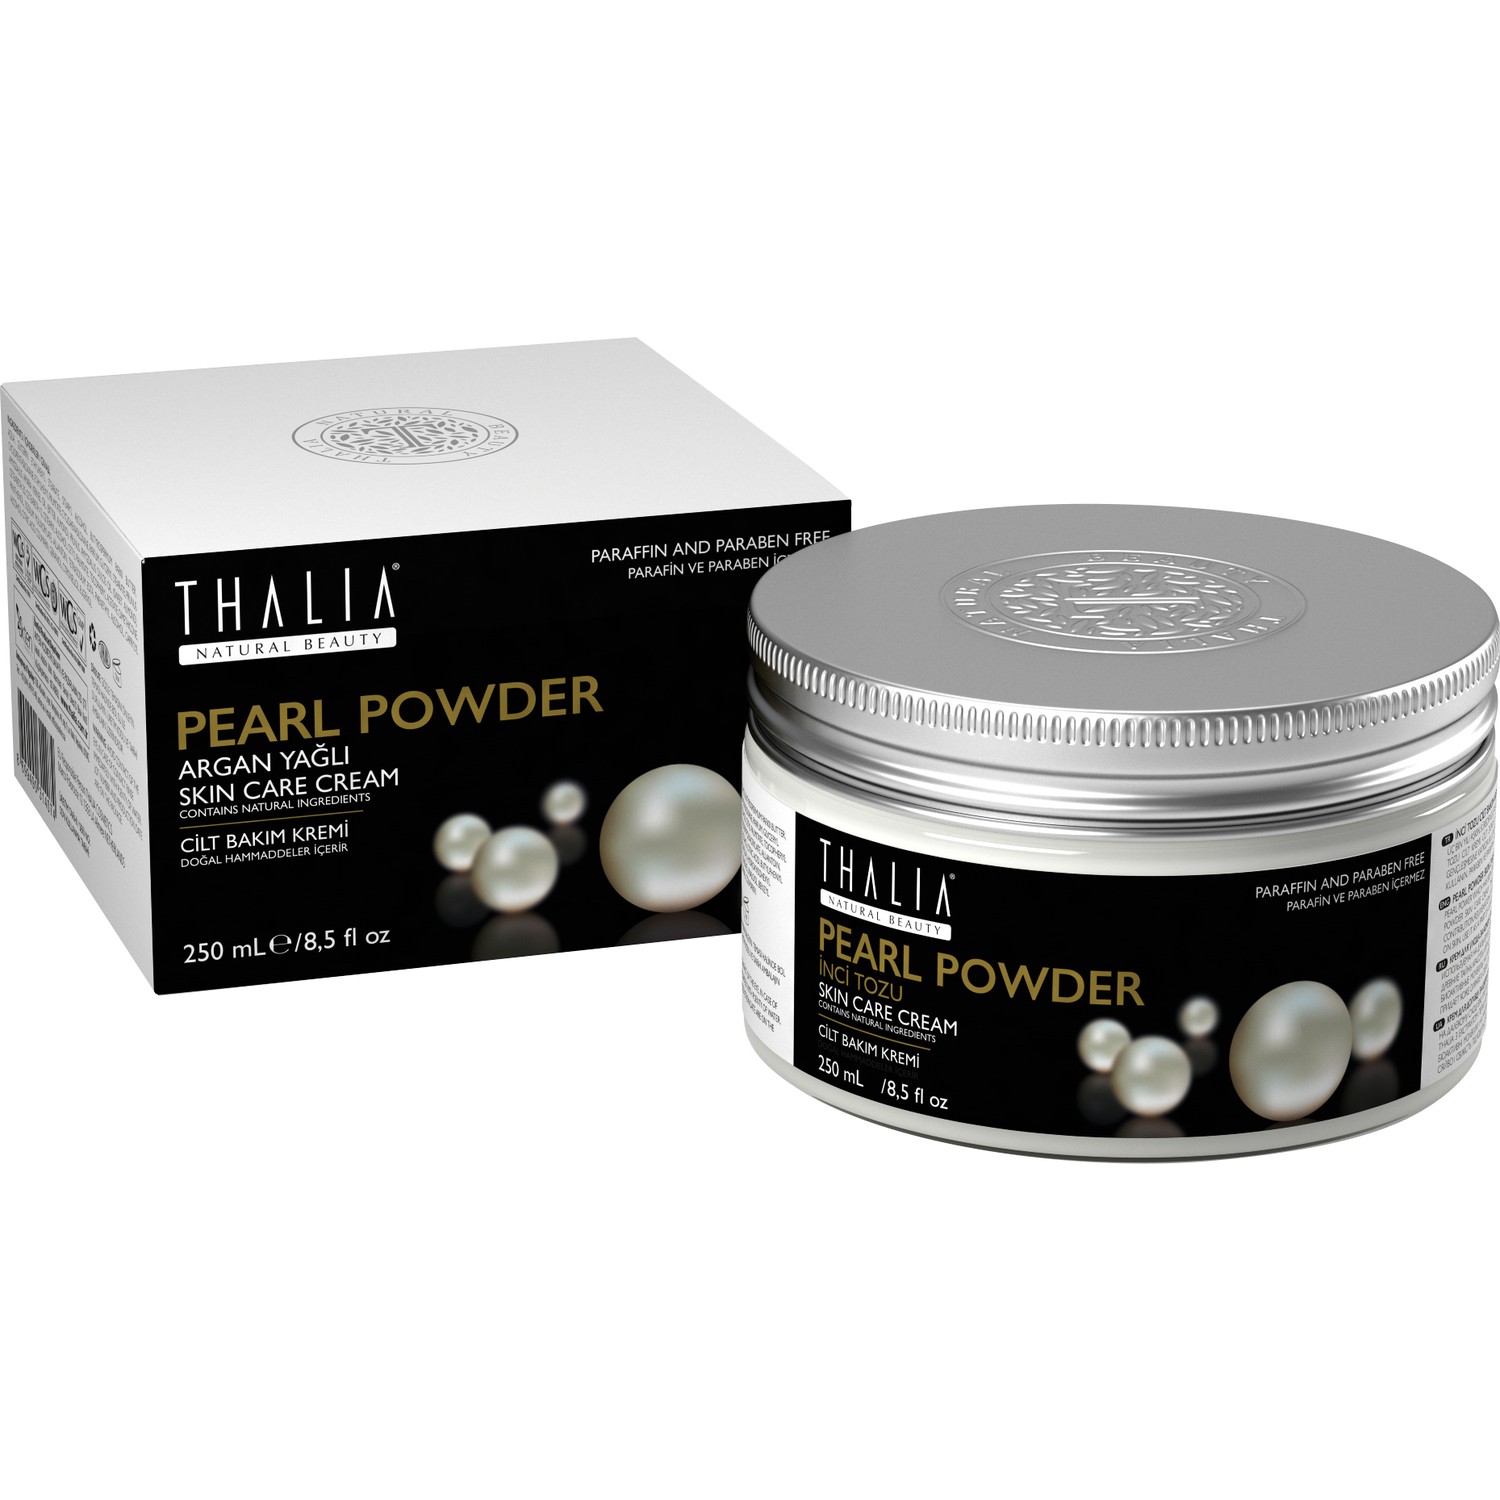 Крем для ухода за кожей Thalia с мерцающей жемчужной пудрой, 250 мл крем для лица thalia natural beauty pearl powder 100 мл